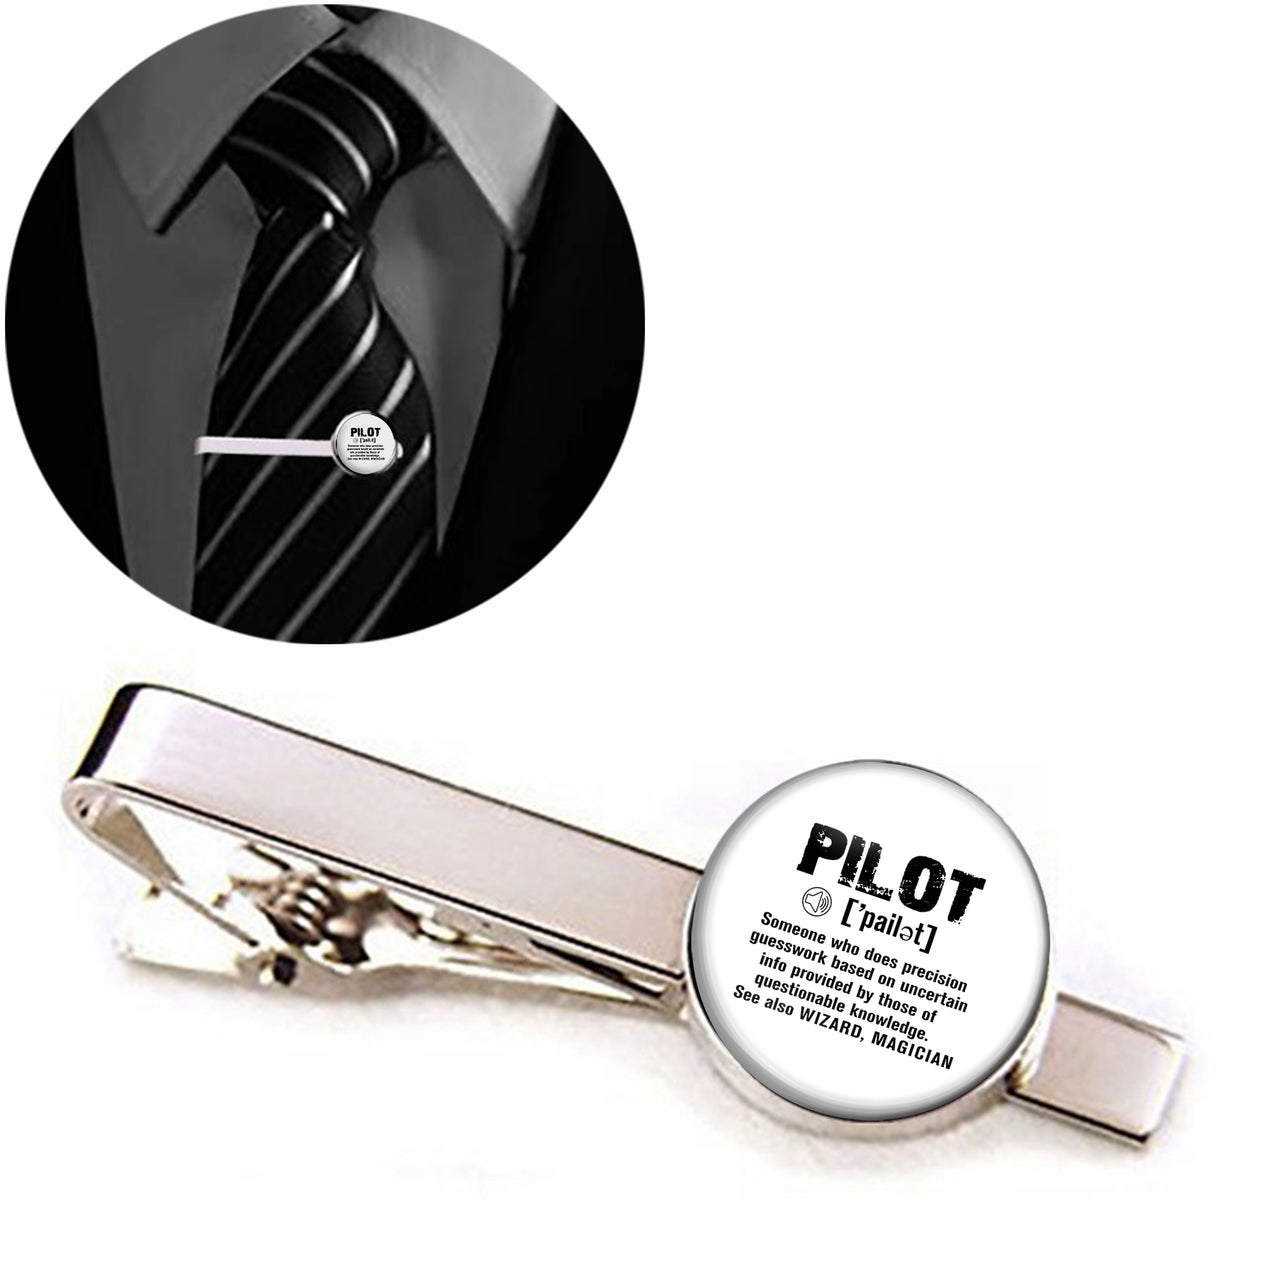 Pilot [Noun] Designed Tie Clips